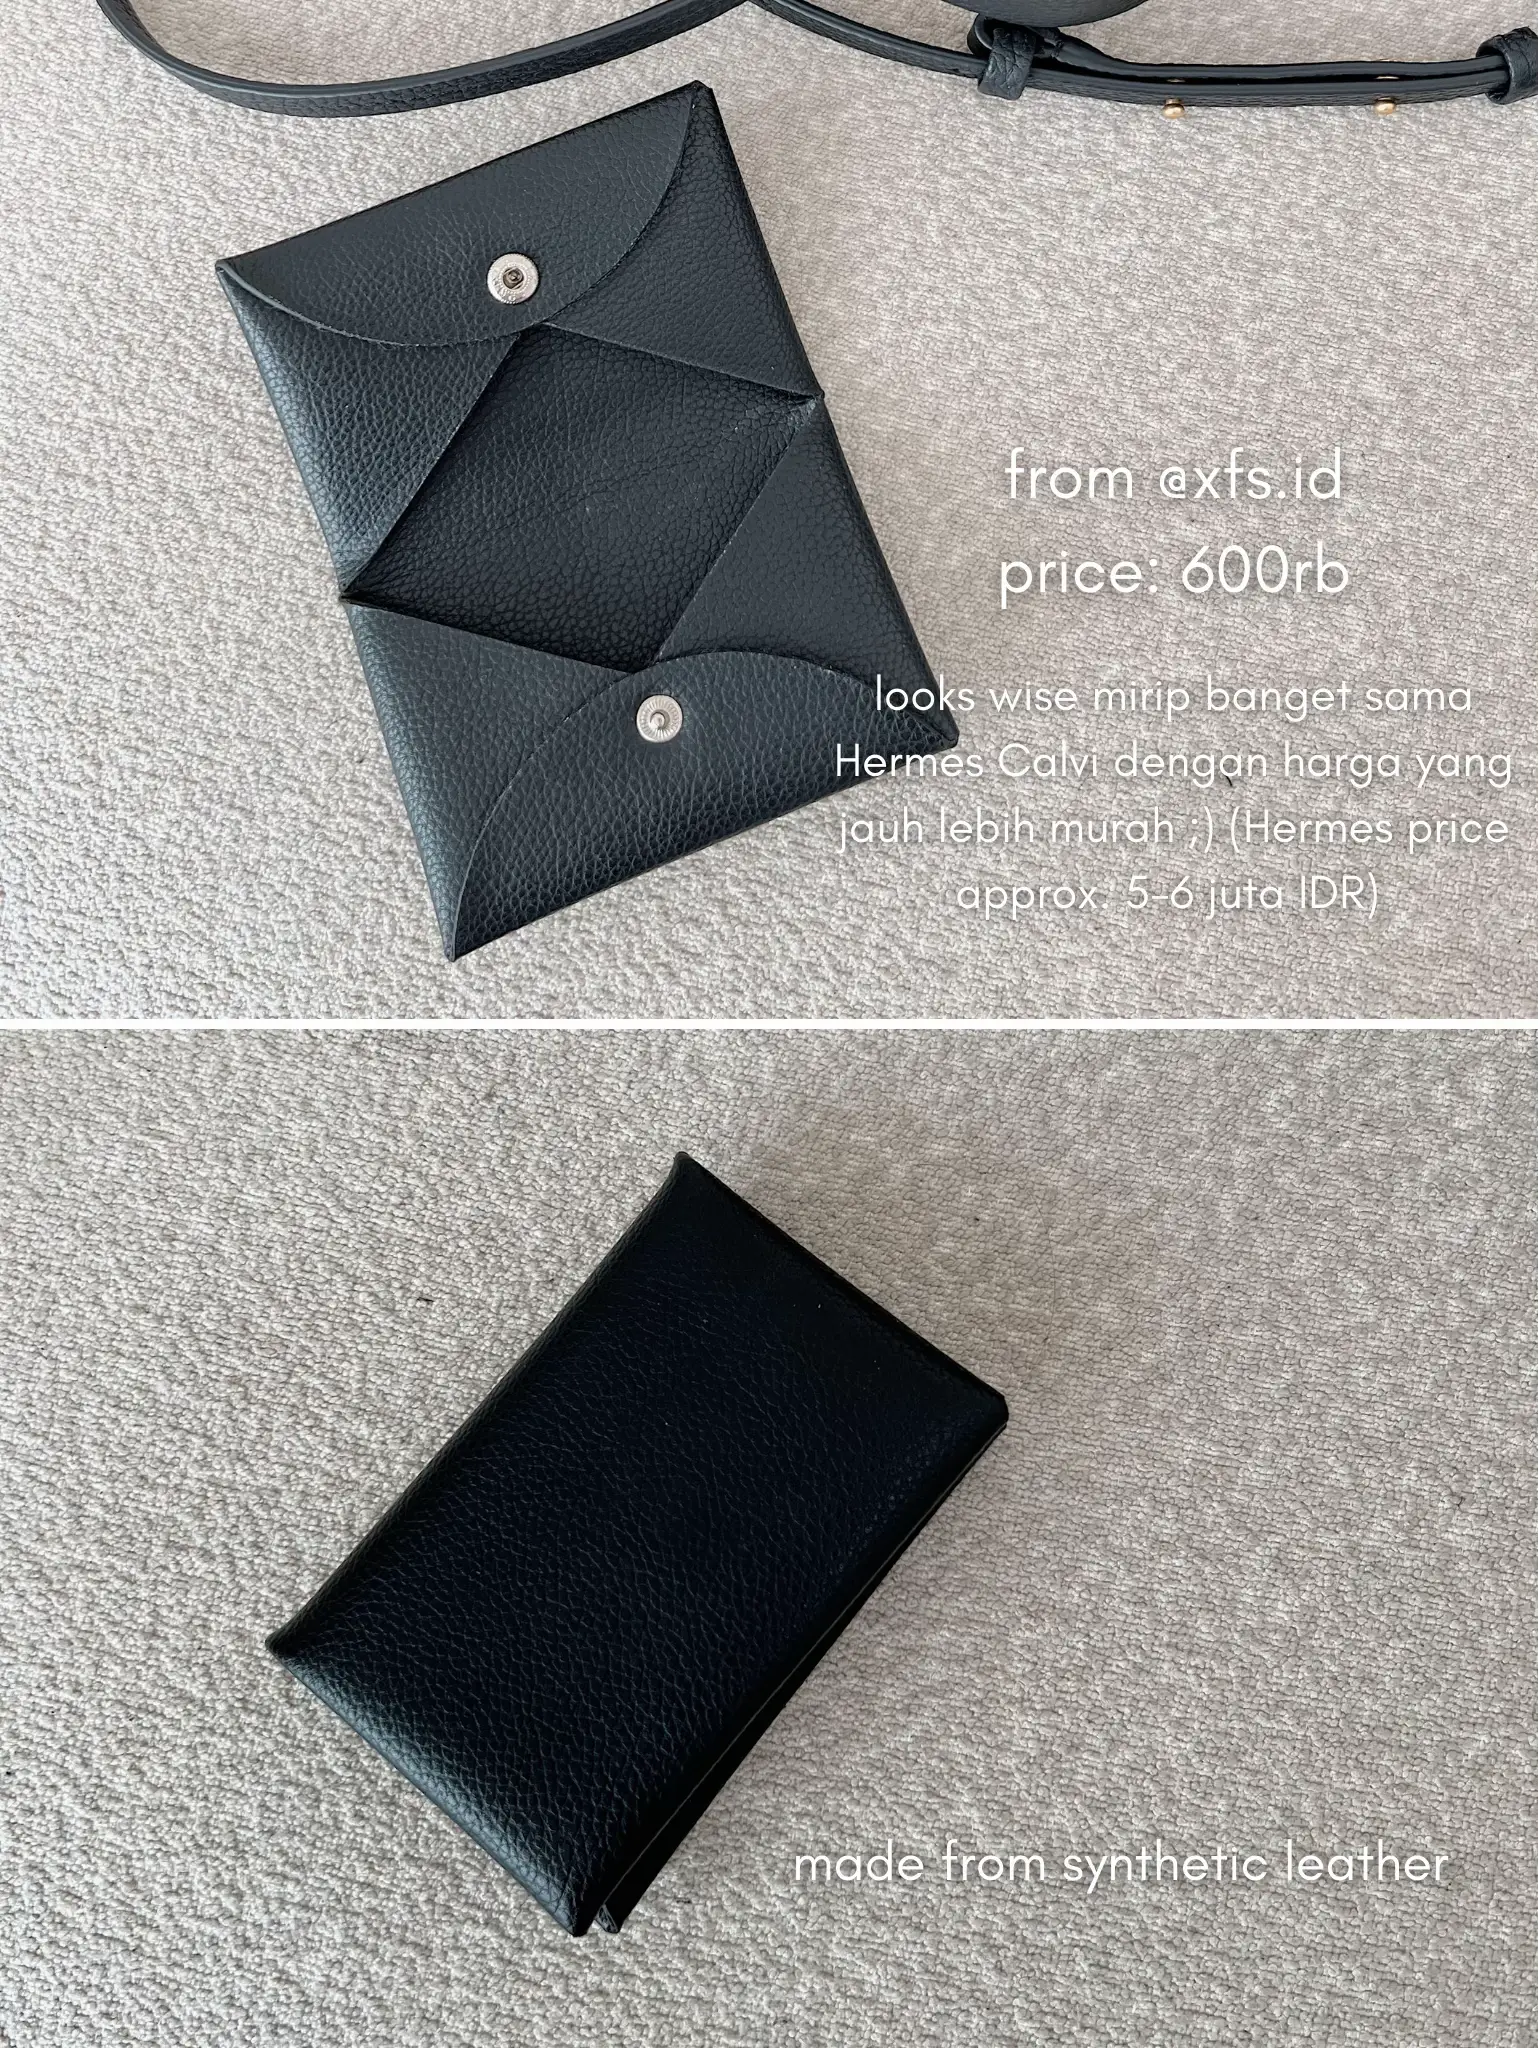 Leather craft ] Making Hermes Calvi cardholder